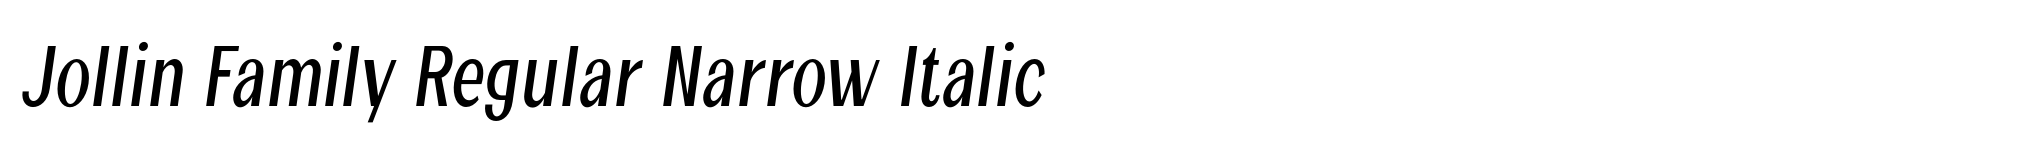 Jollin Family Regular Narrow Italic image